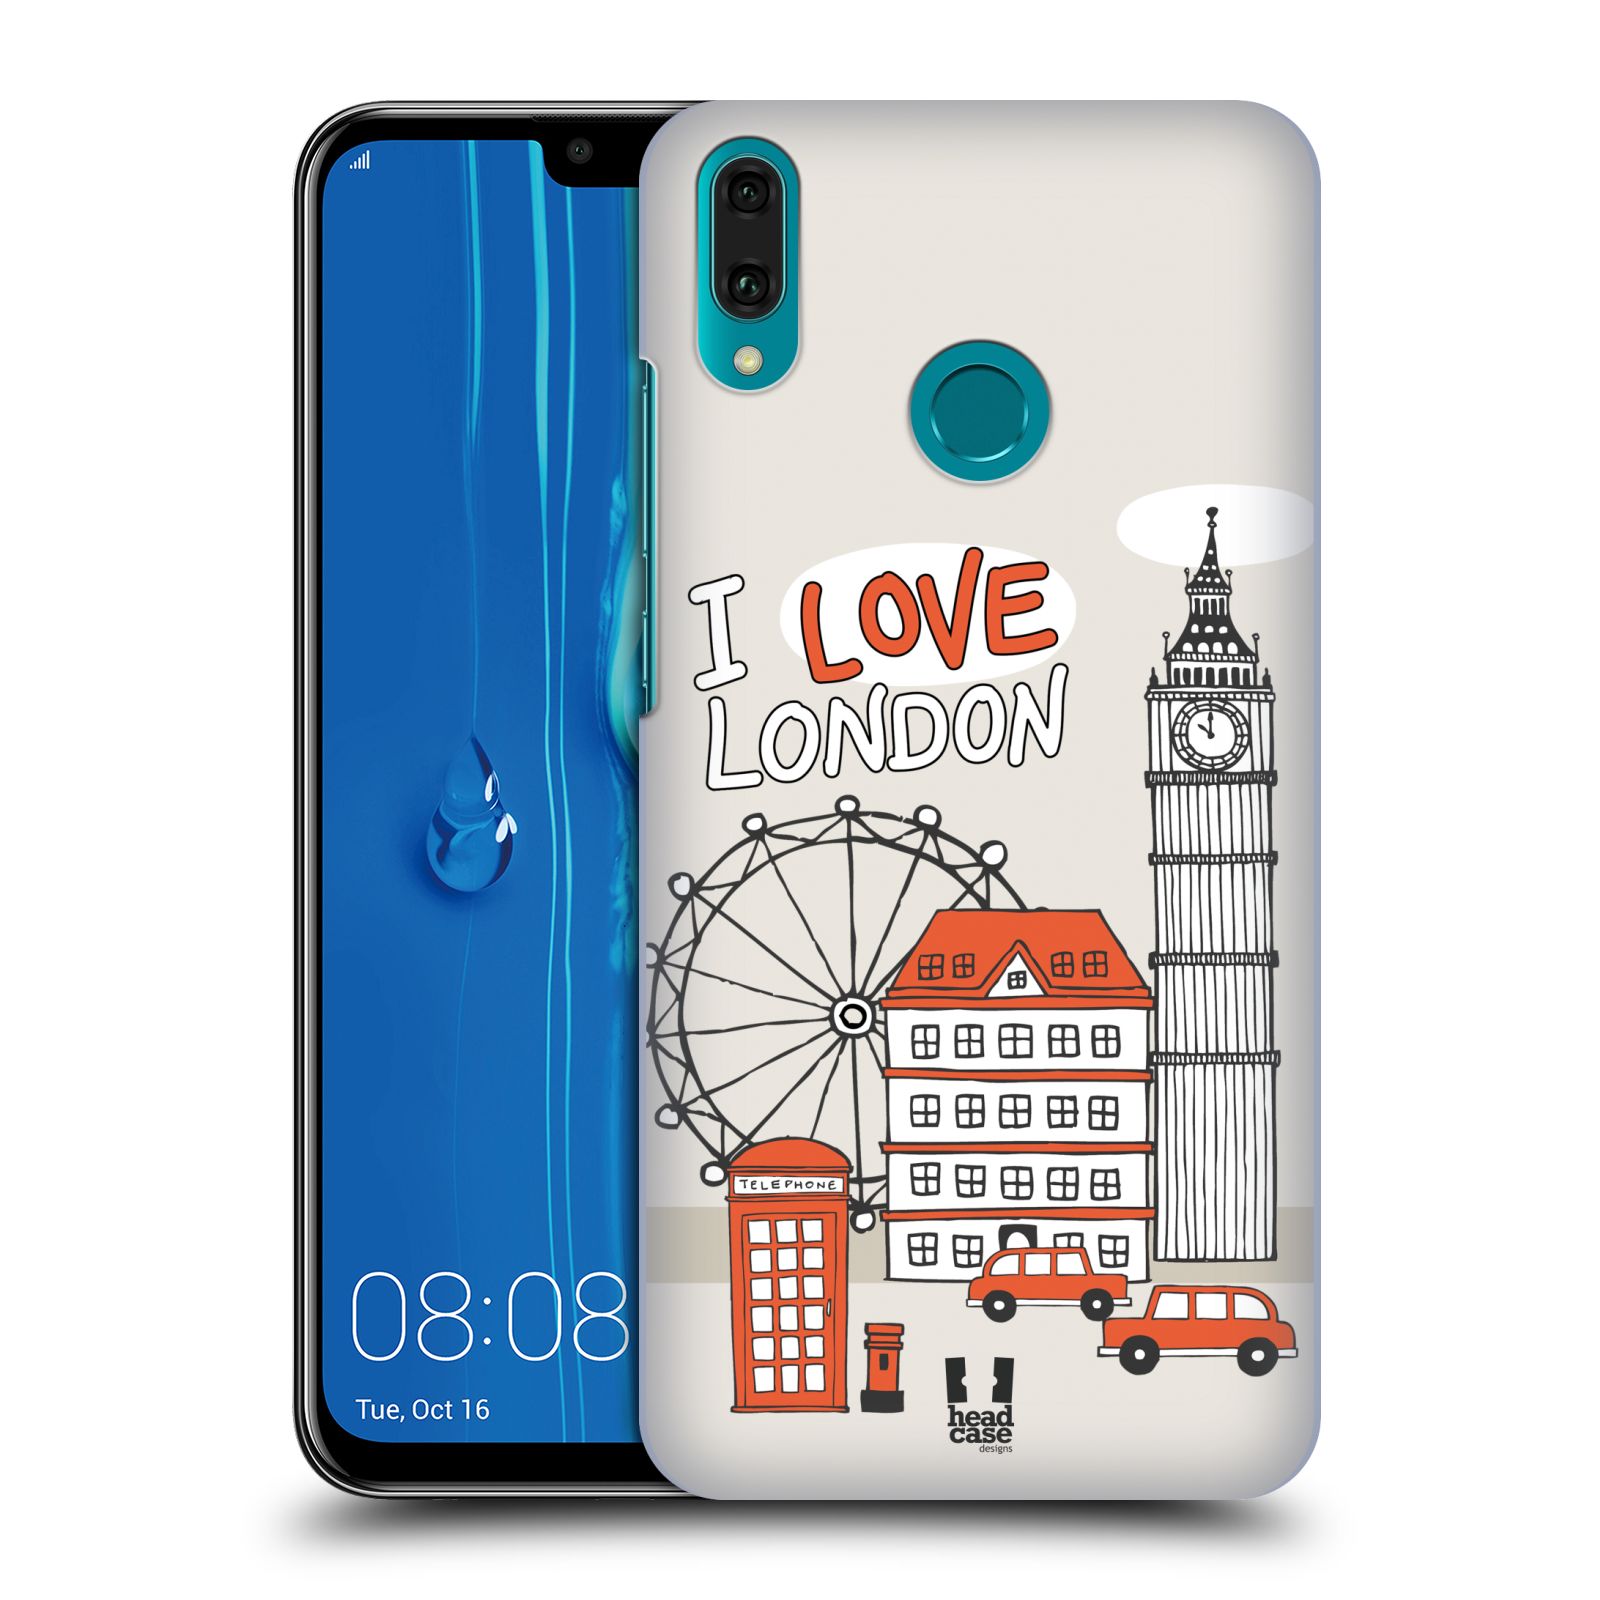 Pouzdro na mobil Huawei Y9 2019 - HEAD CASE - vzor Kreslená městečka ČERVENÁ, Anglie, Londýn, I LOVE LONDON